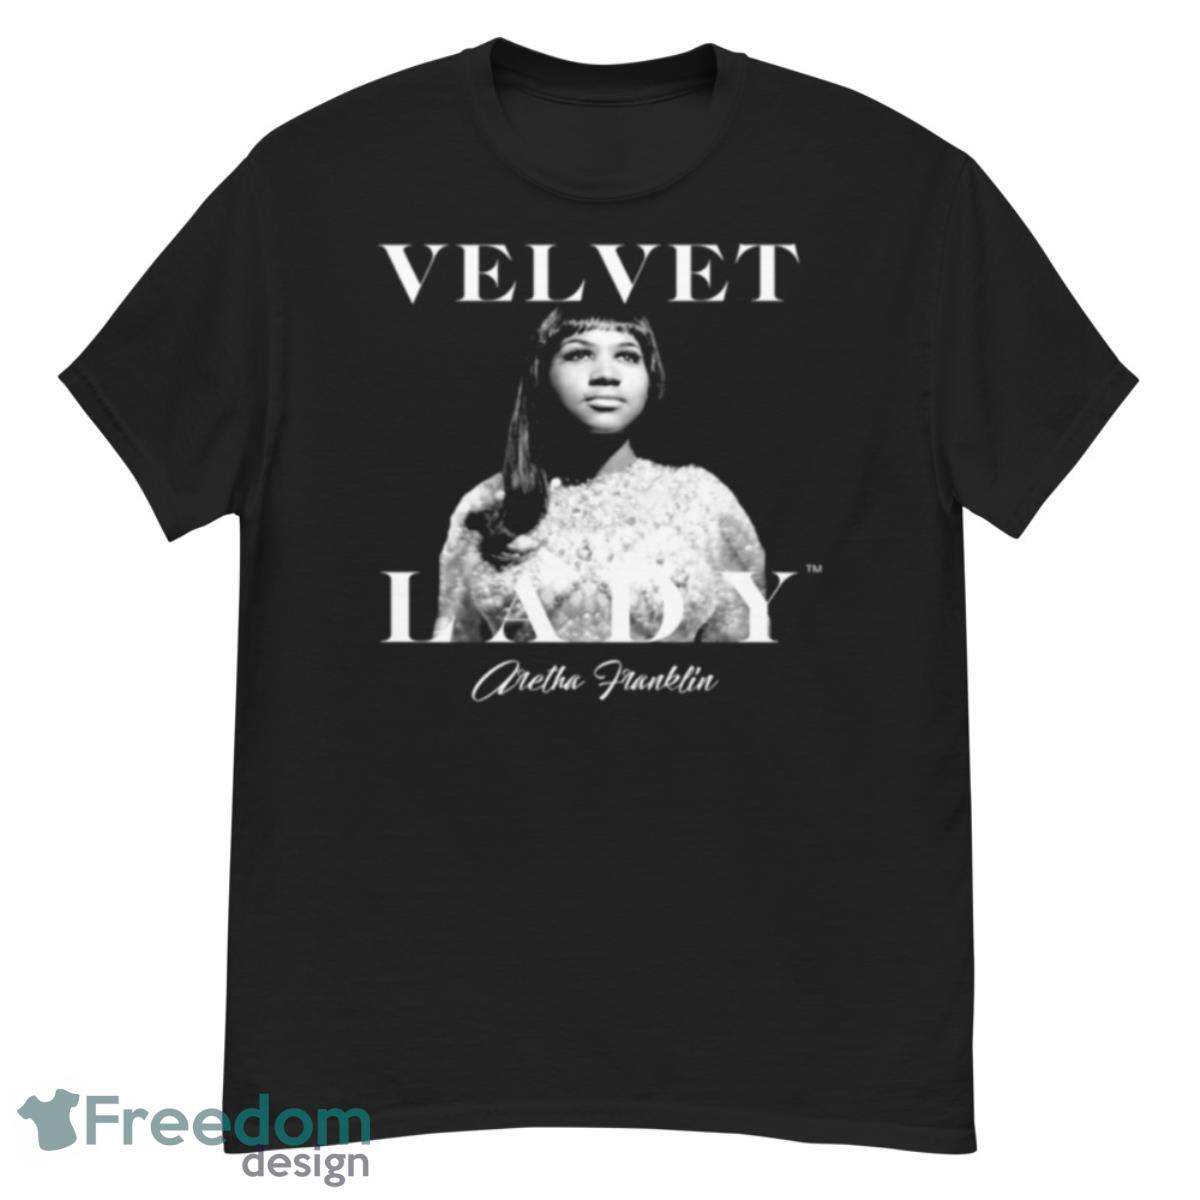 Velvet Lady Aretha Franklin Essential shirt - G500 Men’s Classic T-Shirt